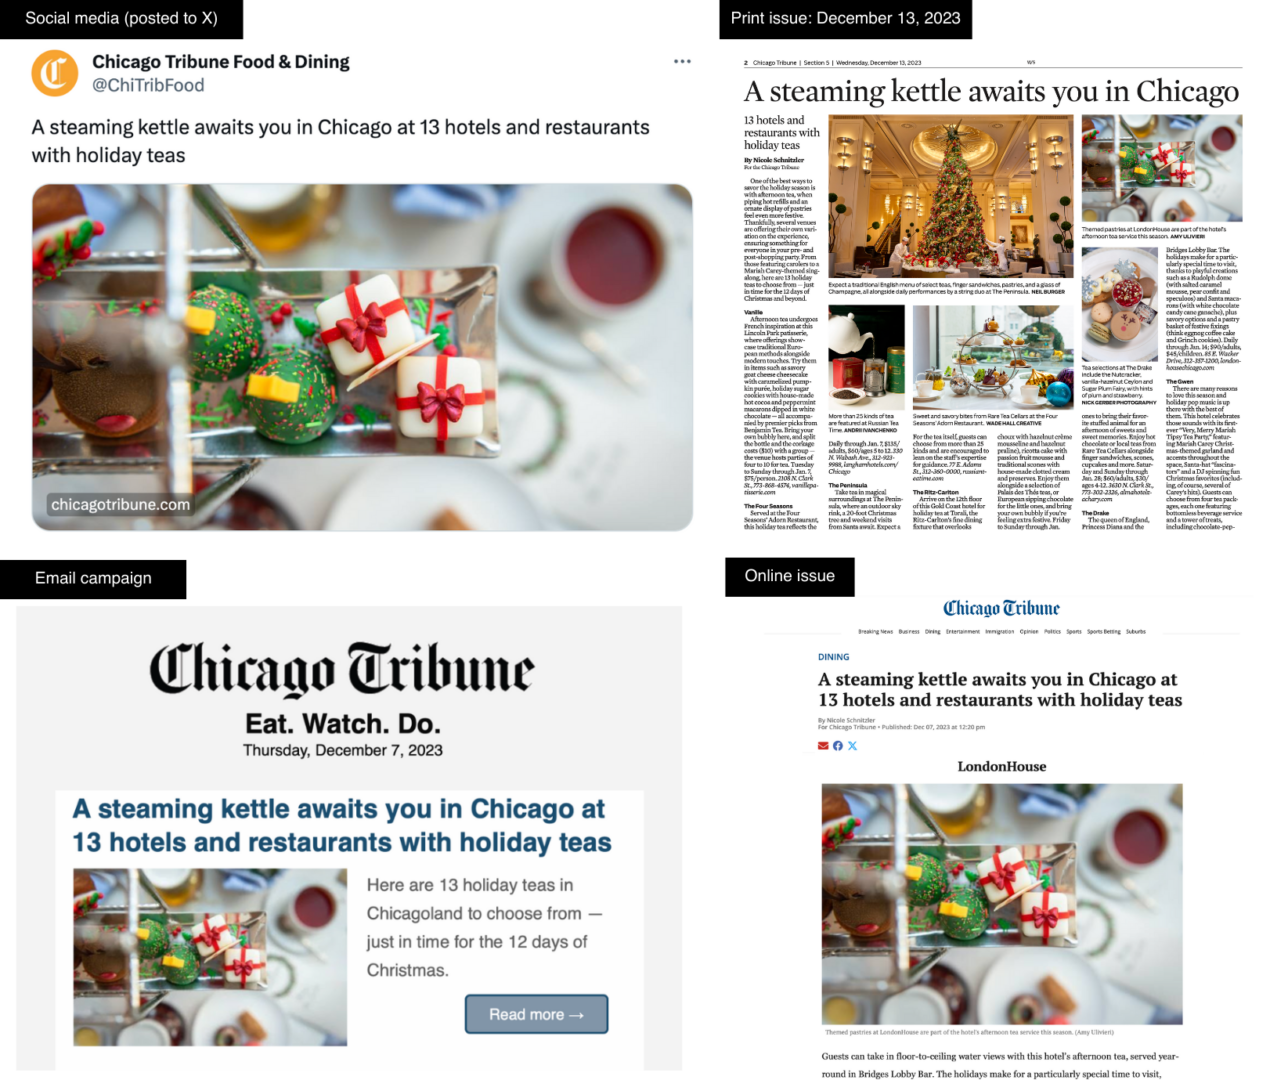 LondonHouse Holiday Tea in the Chicago Tribune